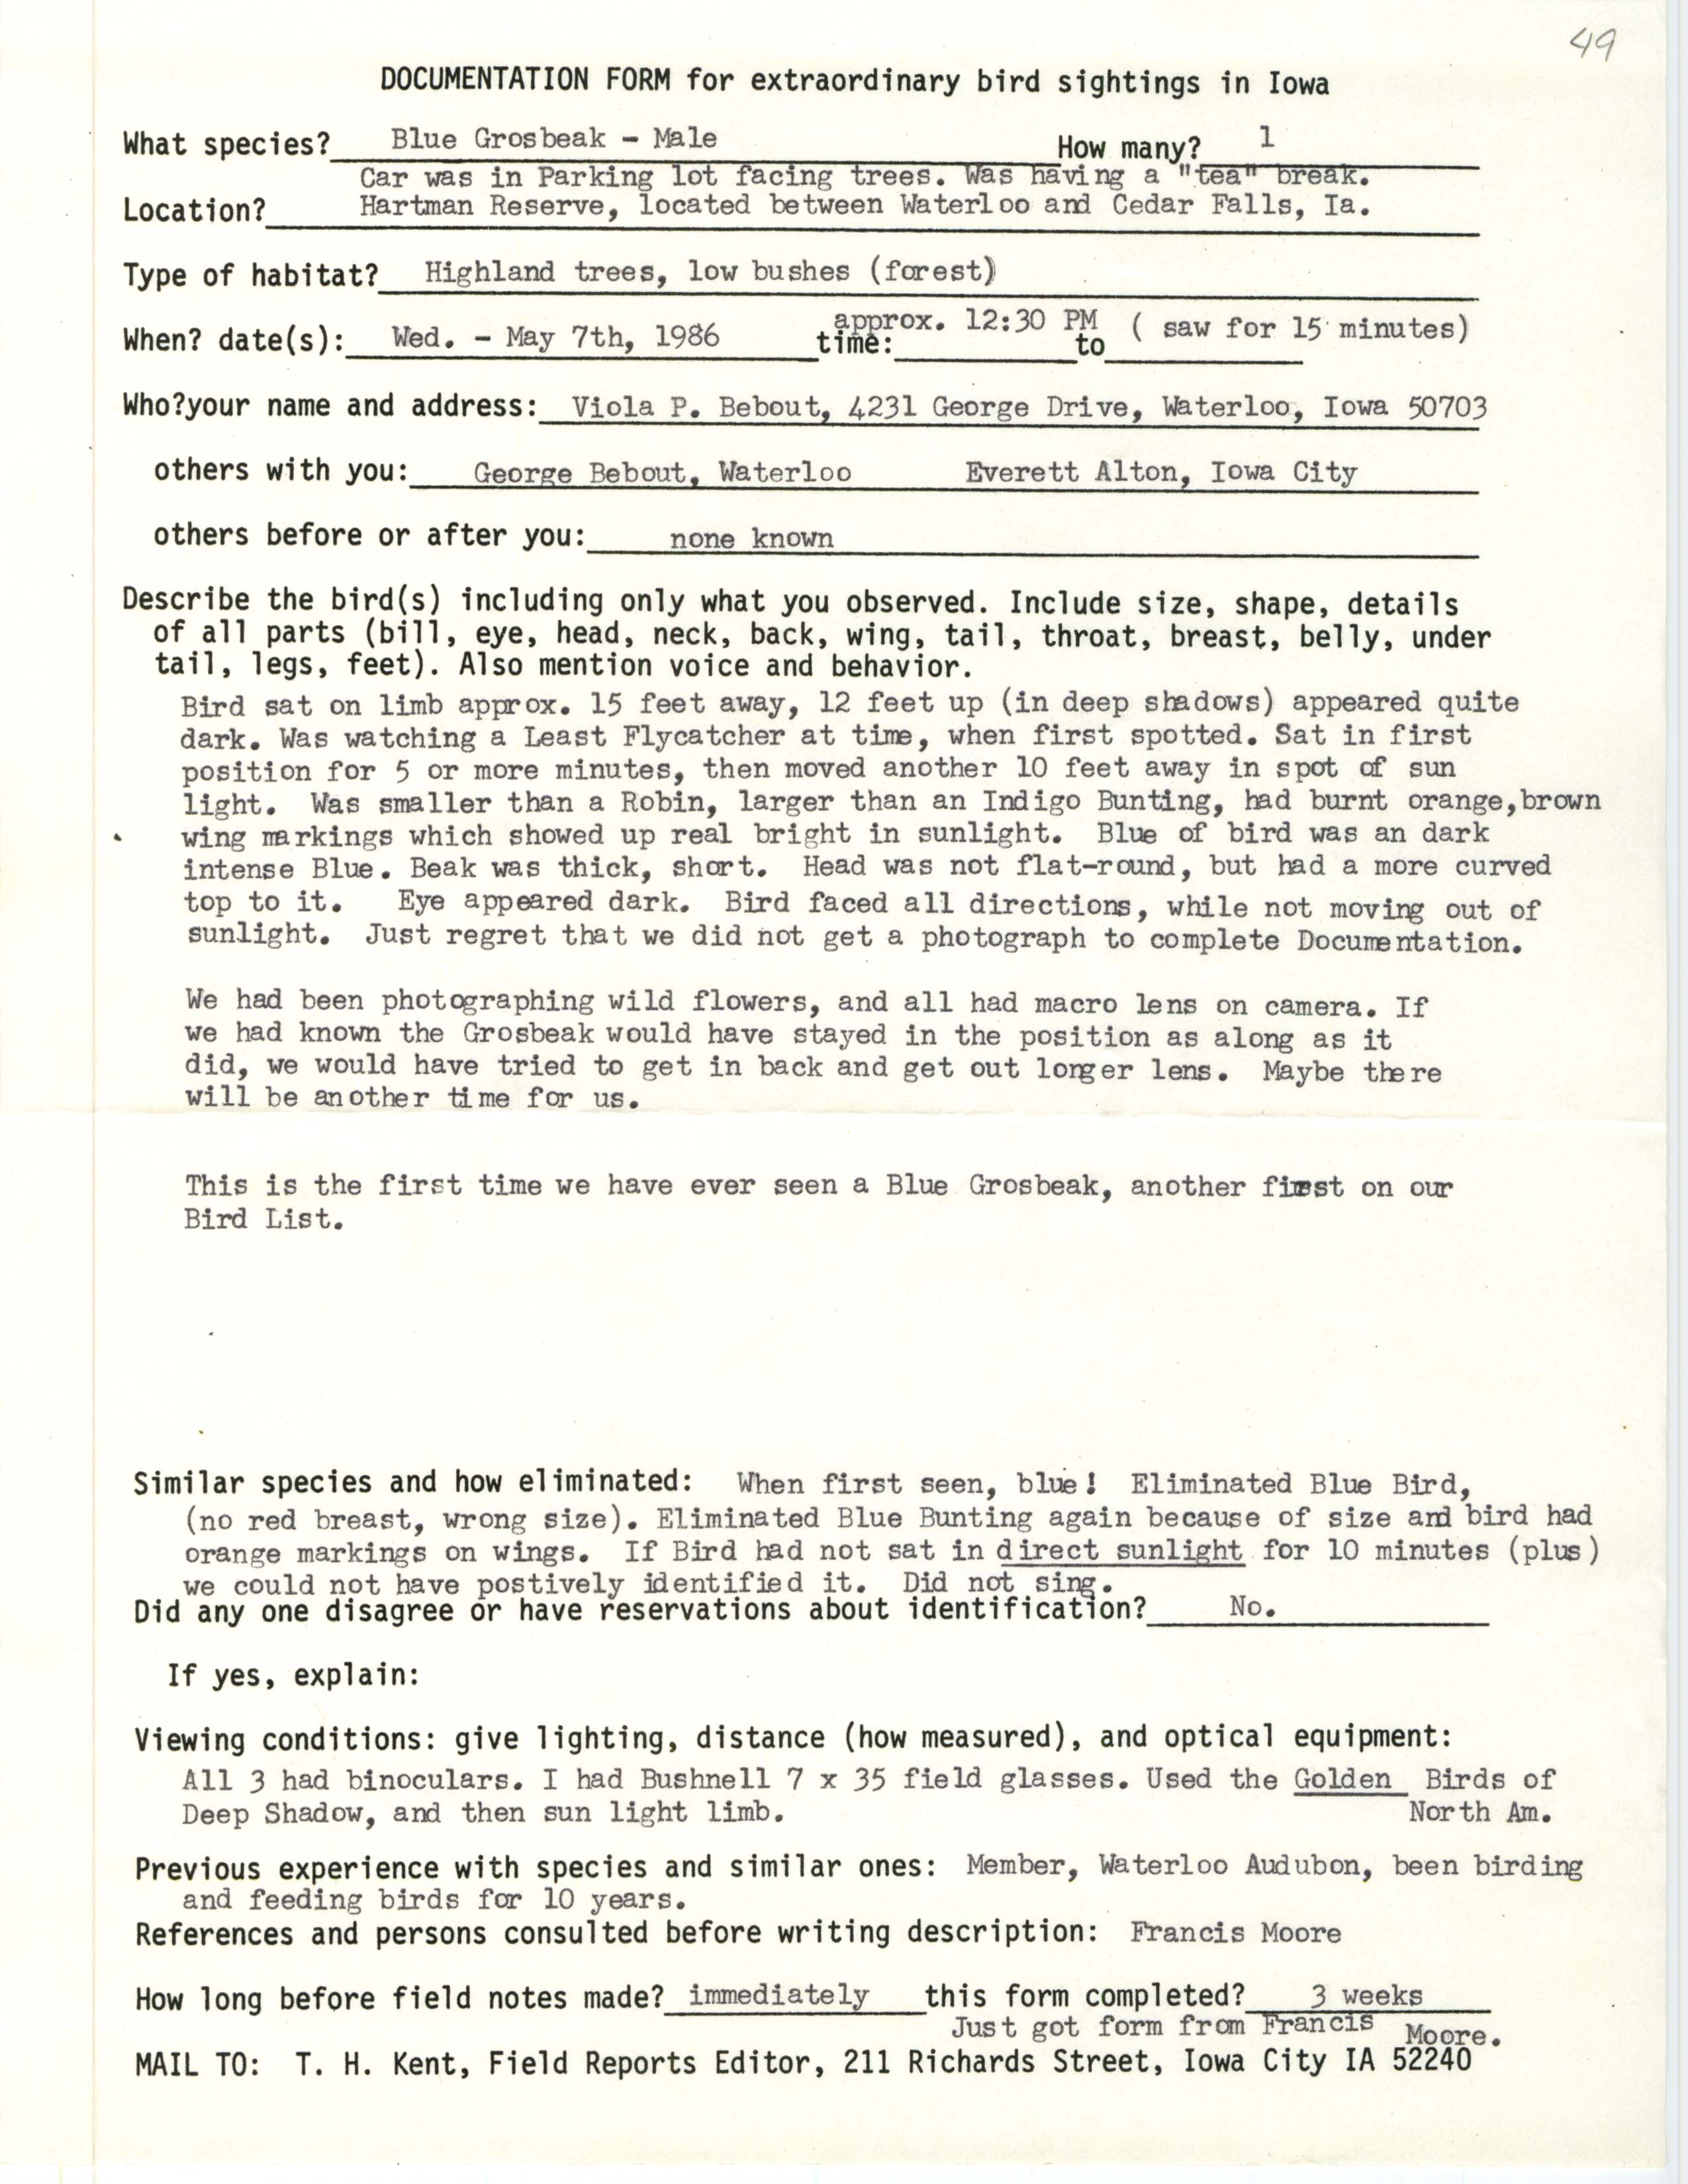 Rare bird documentation form for Blue Grosbeak at the Hartman Reserve Nature Center, 1986